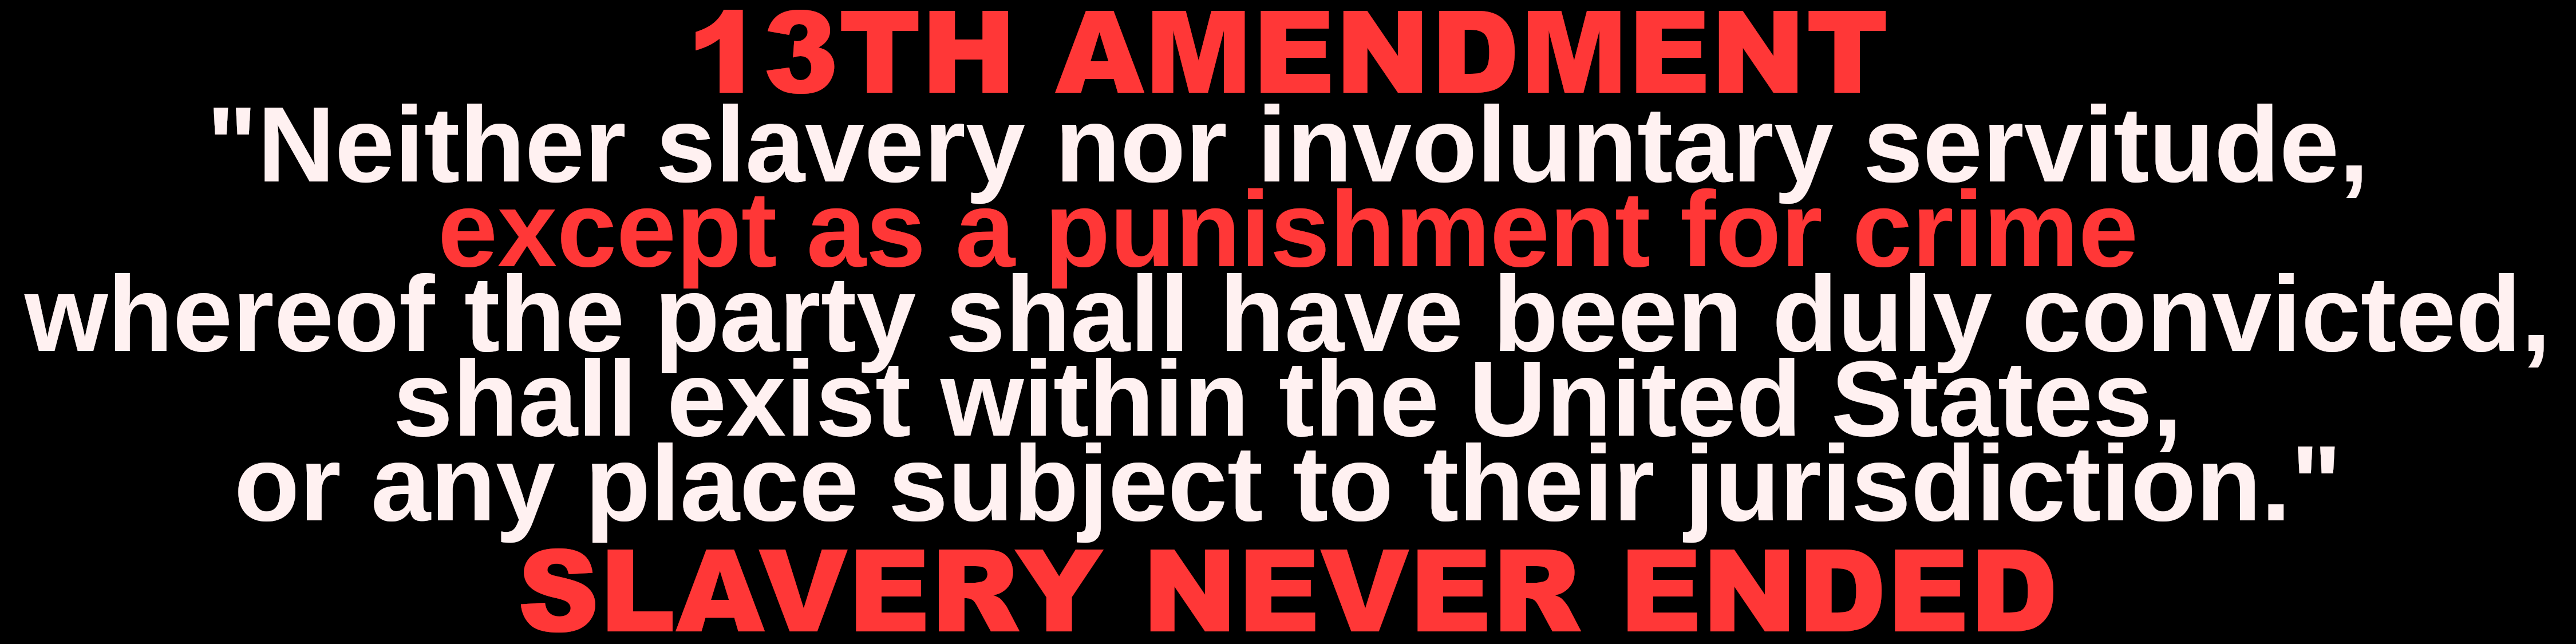 13th_Amendment_bumpersticker-1